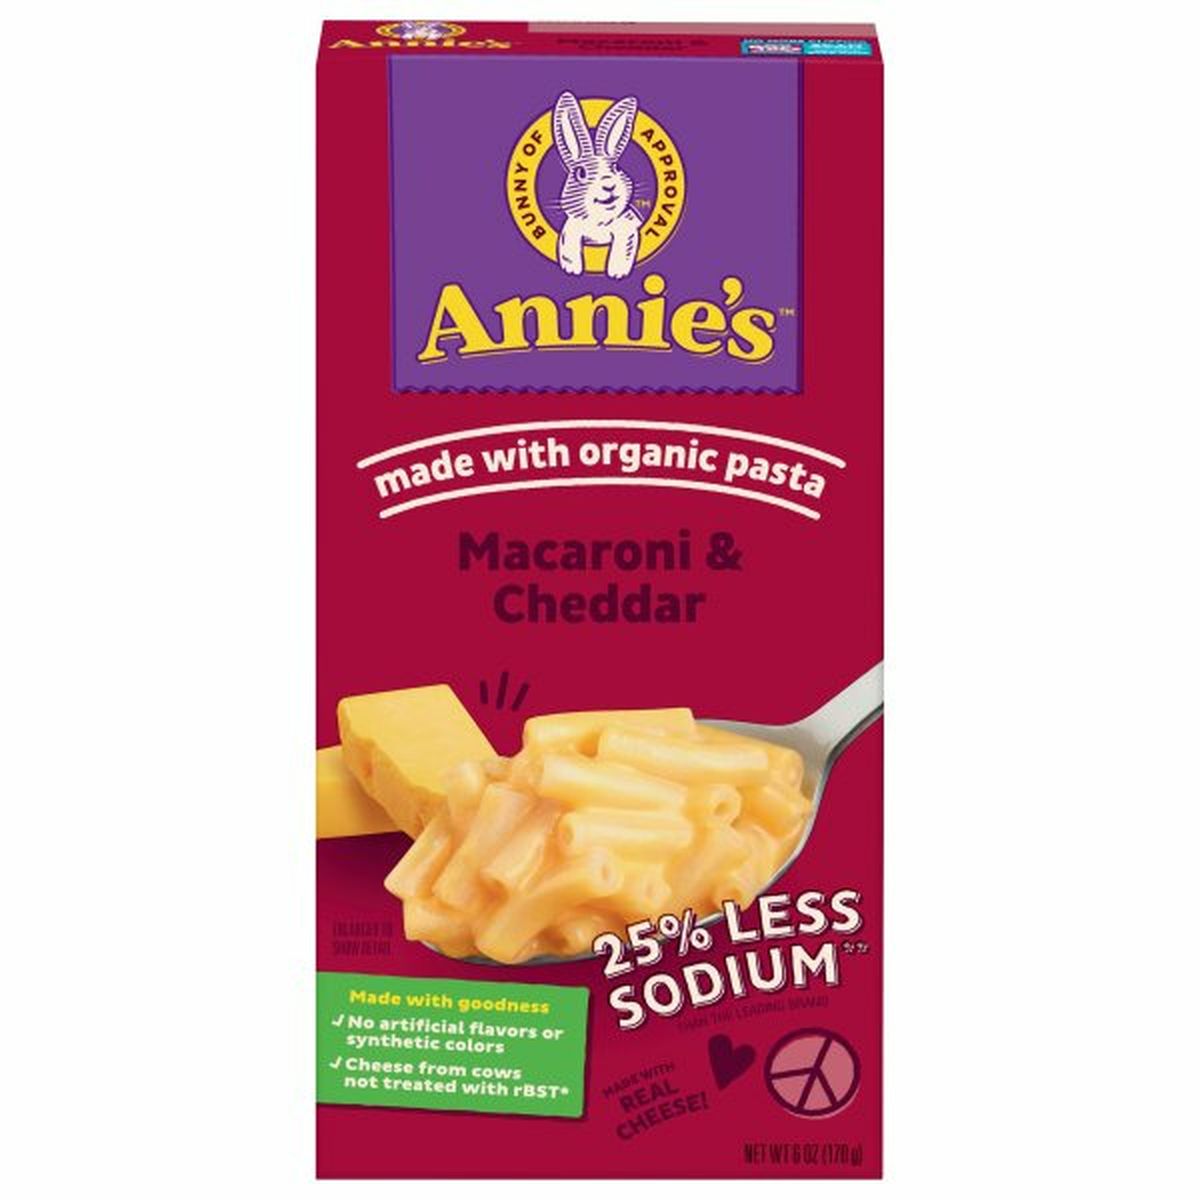 Calories in Annie's Macaroni & Cheddar